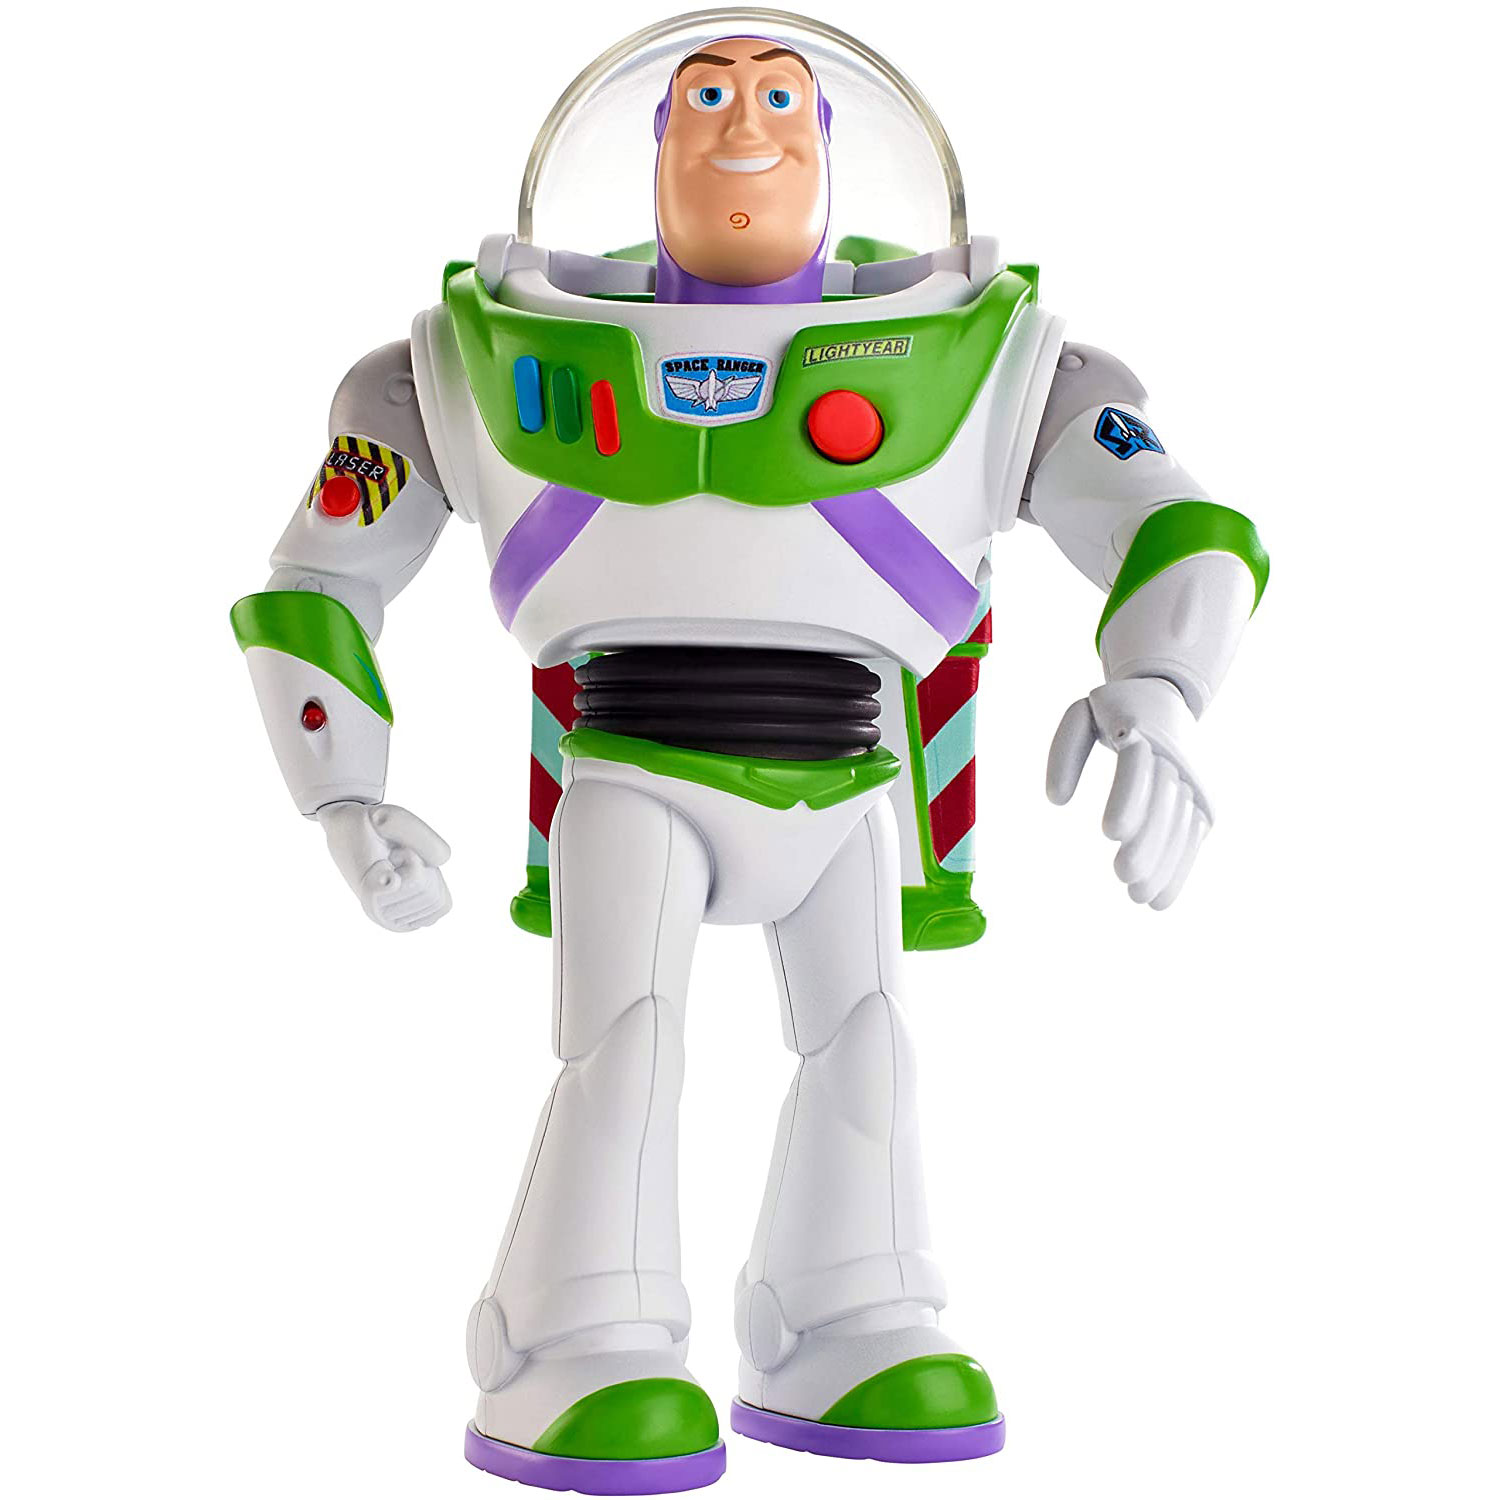 Disney Pixar Toy Story Ultimate Walking Buzz Lightyear - image 1 of 8